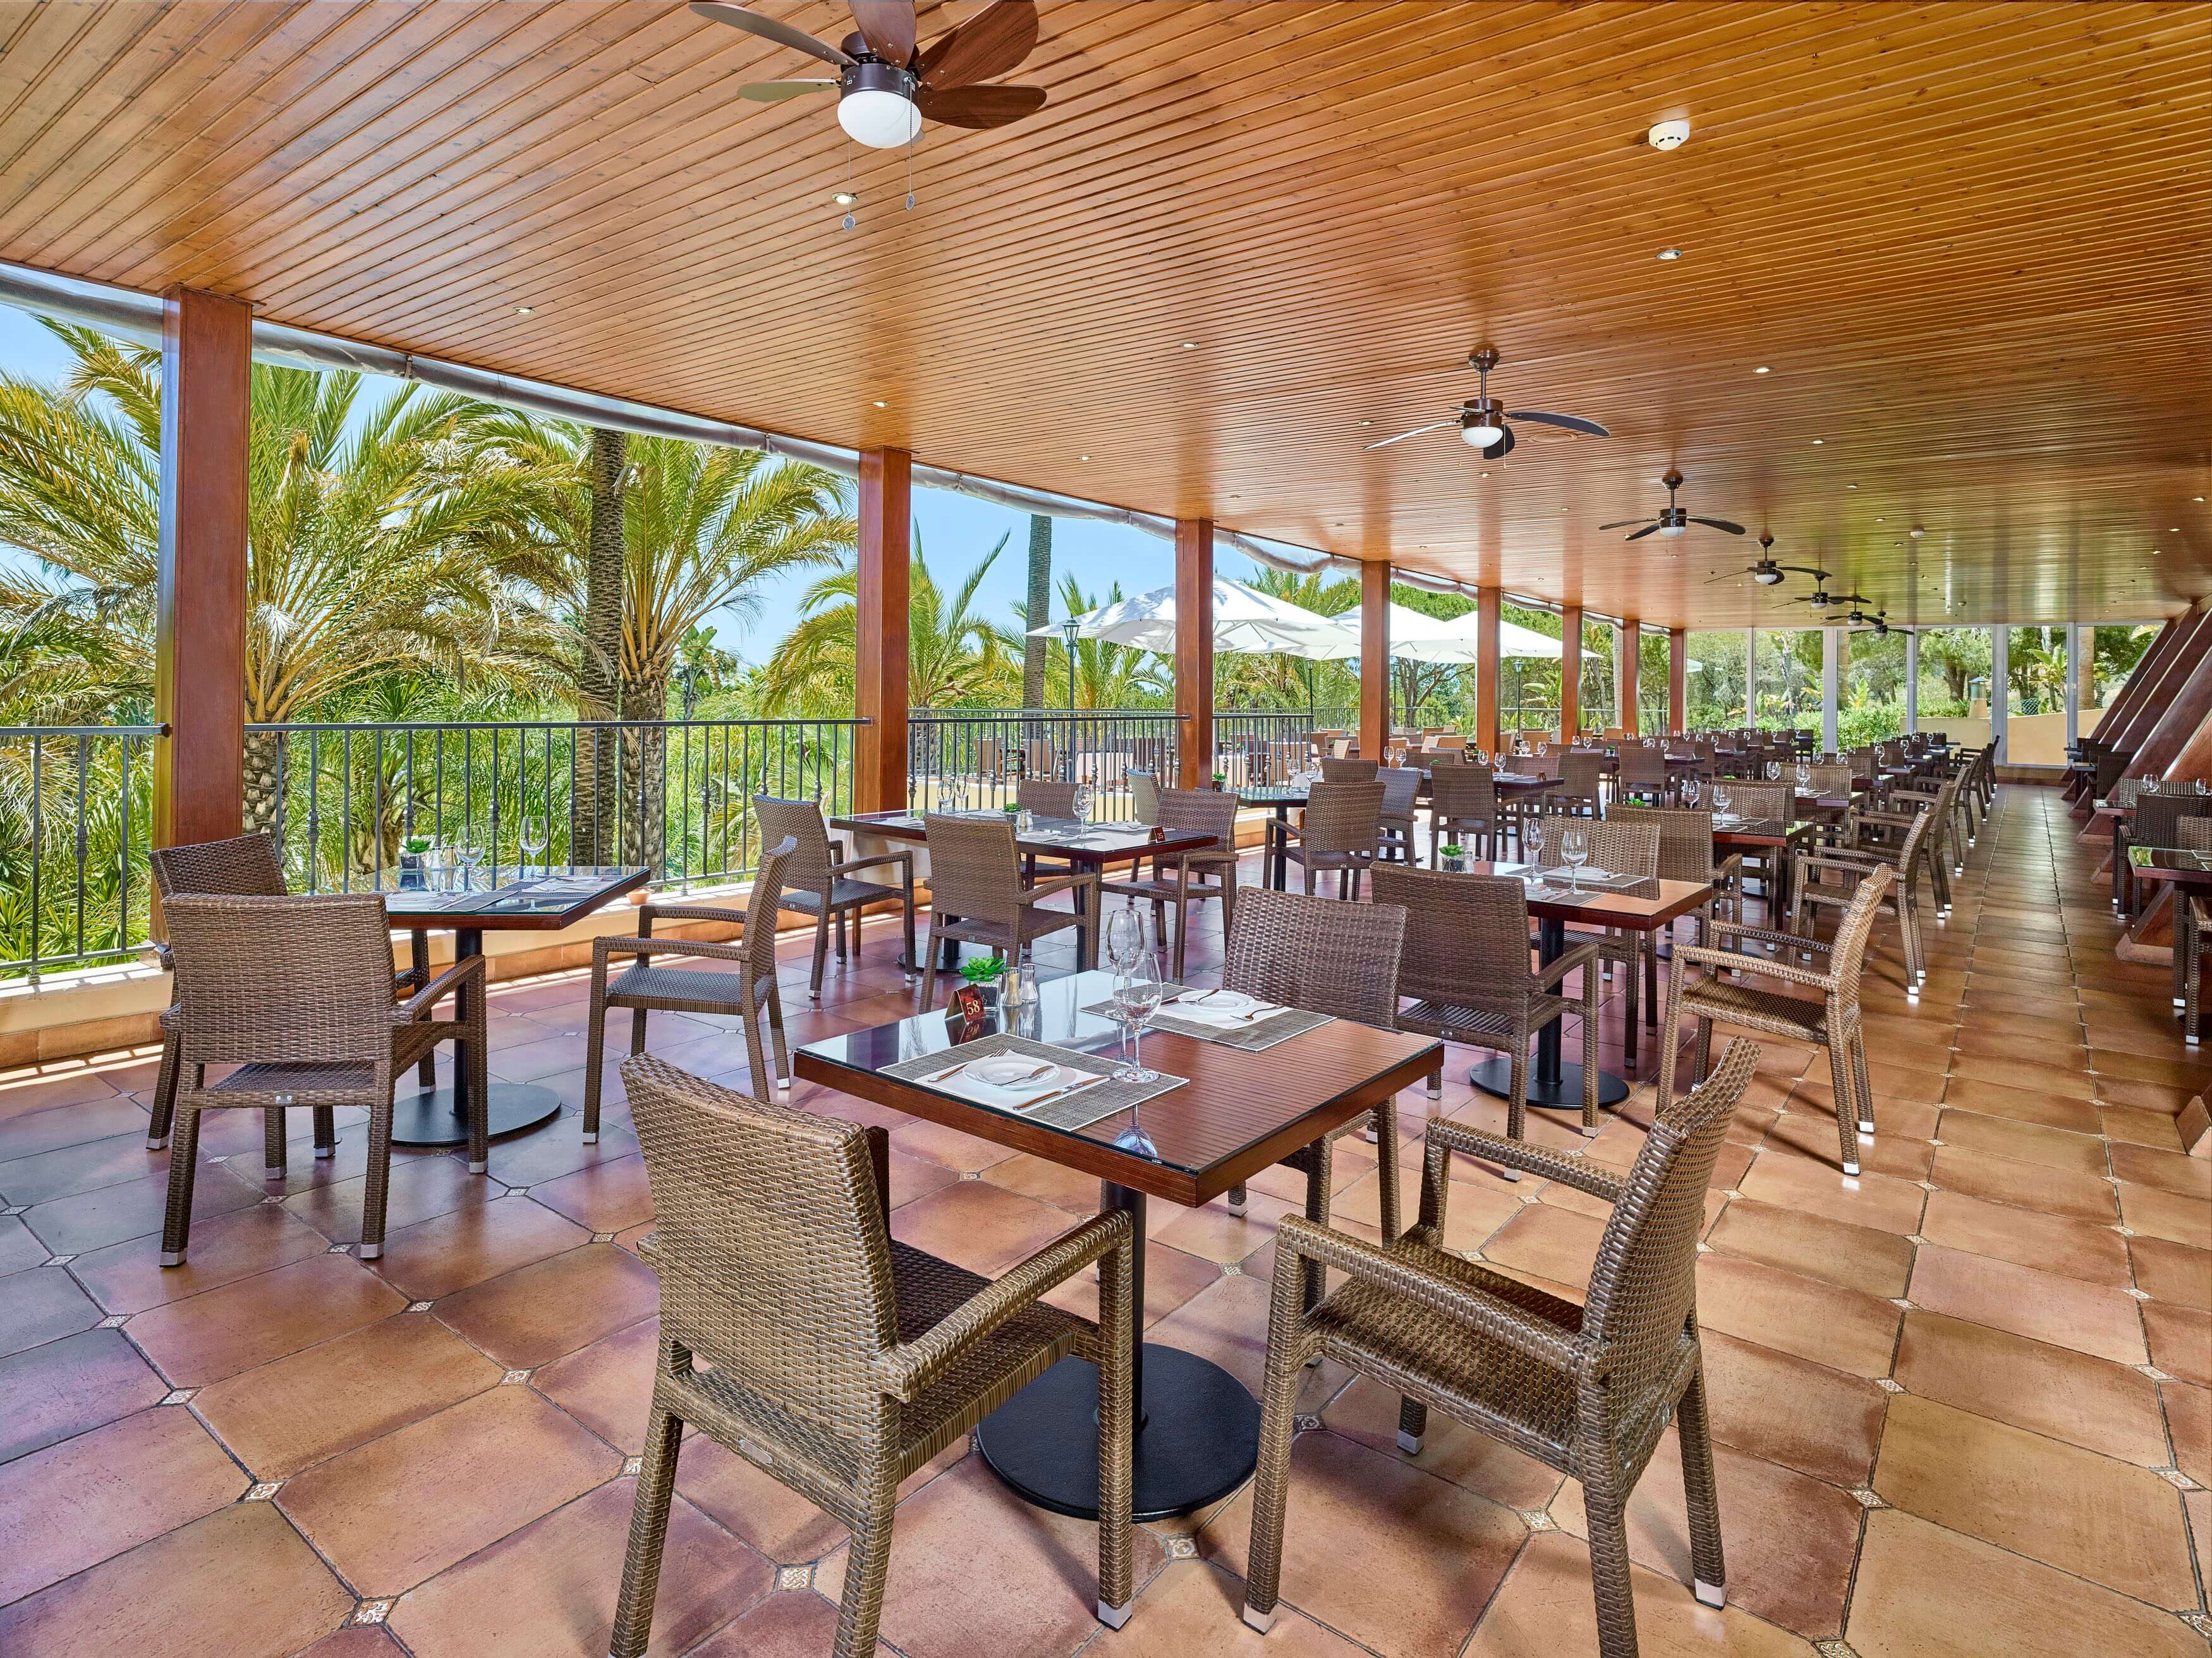 38 rph lusitano restaurant covered terrace